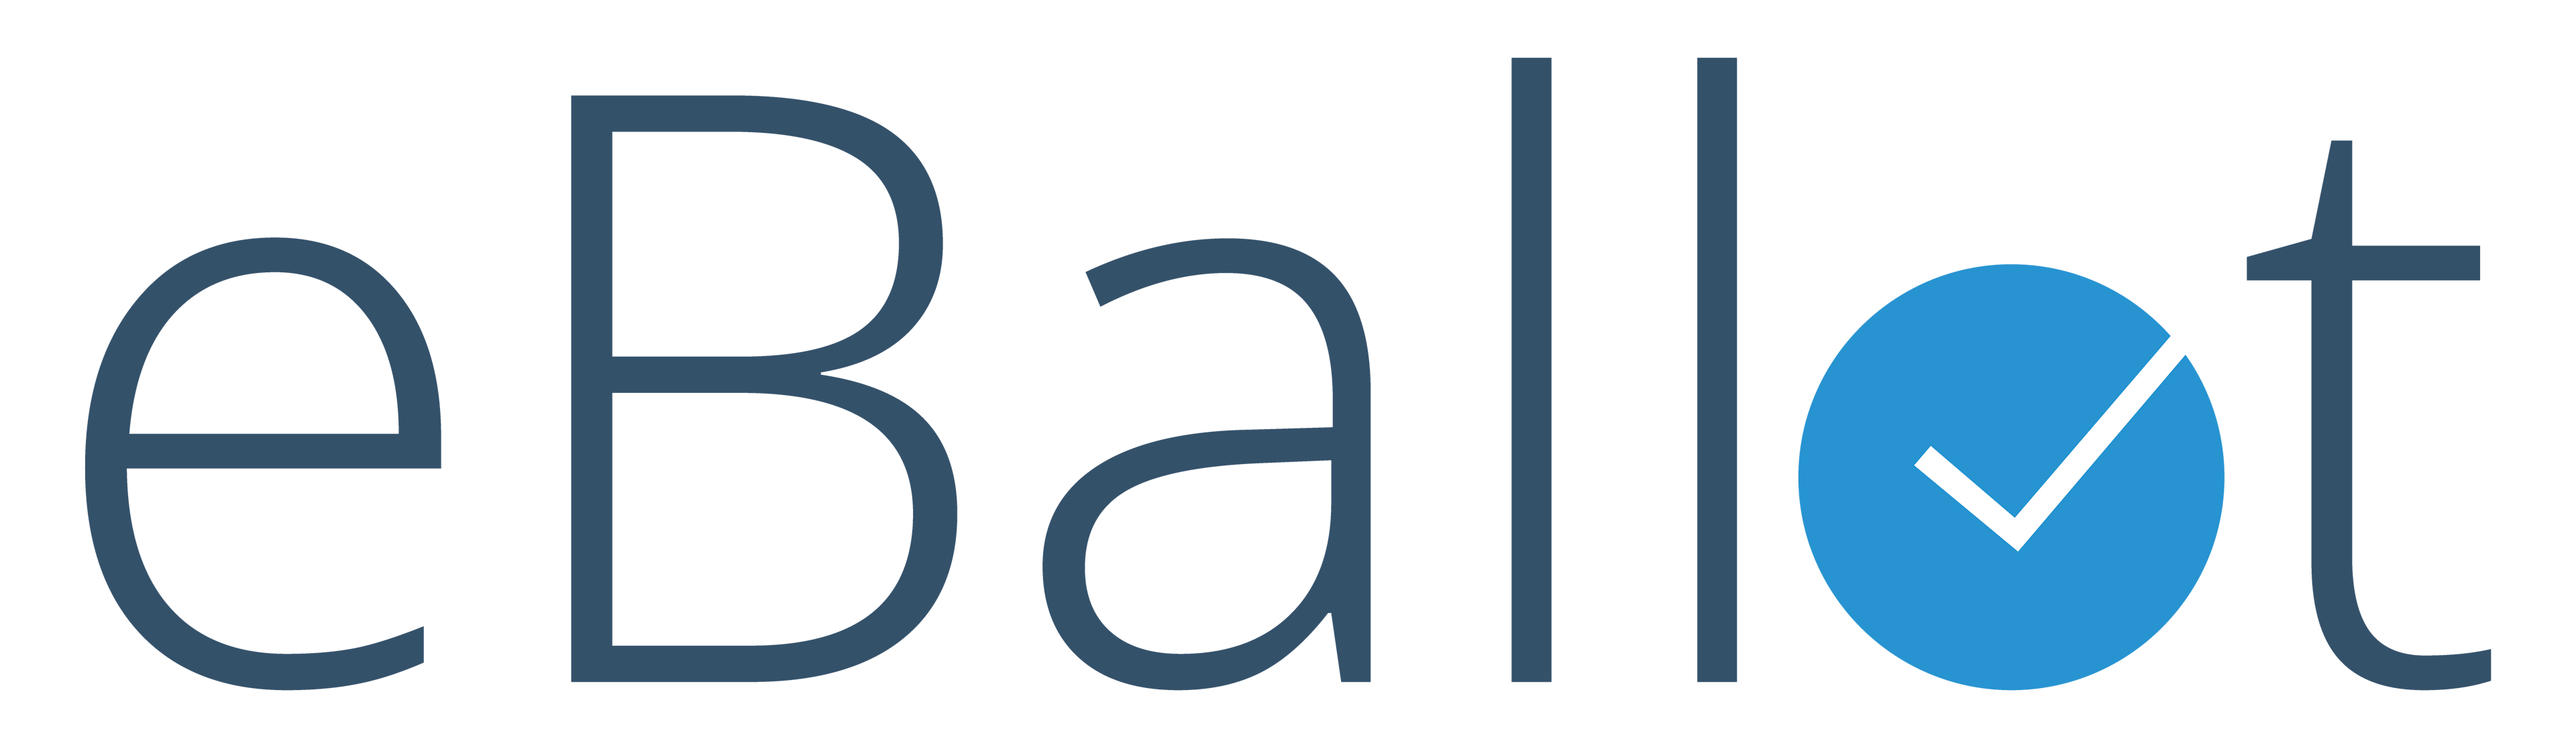 eBallot Logo